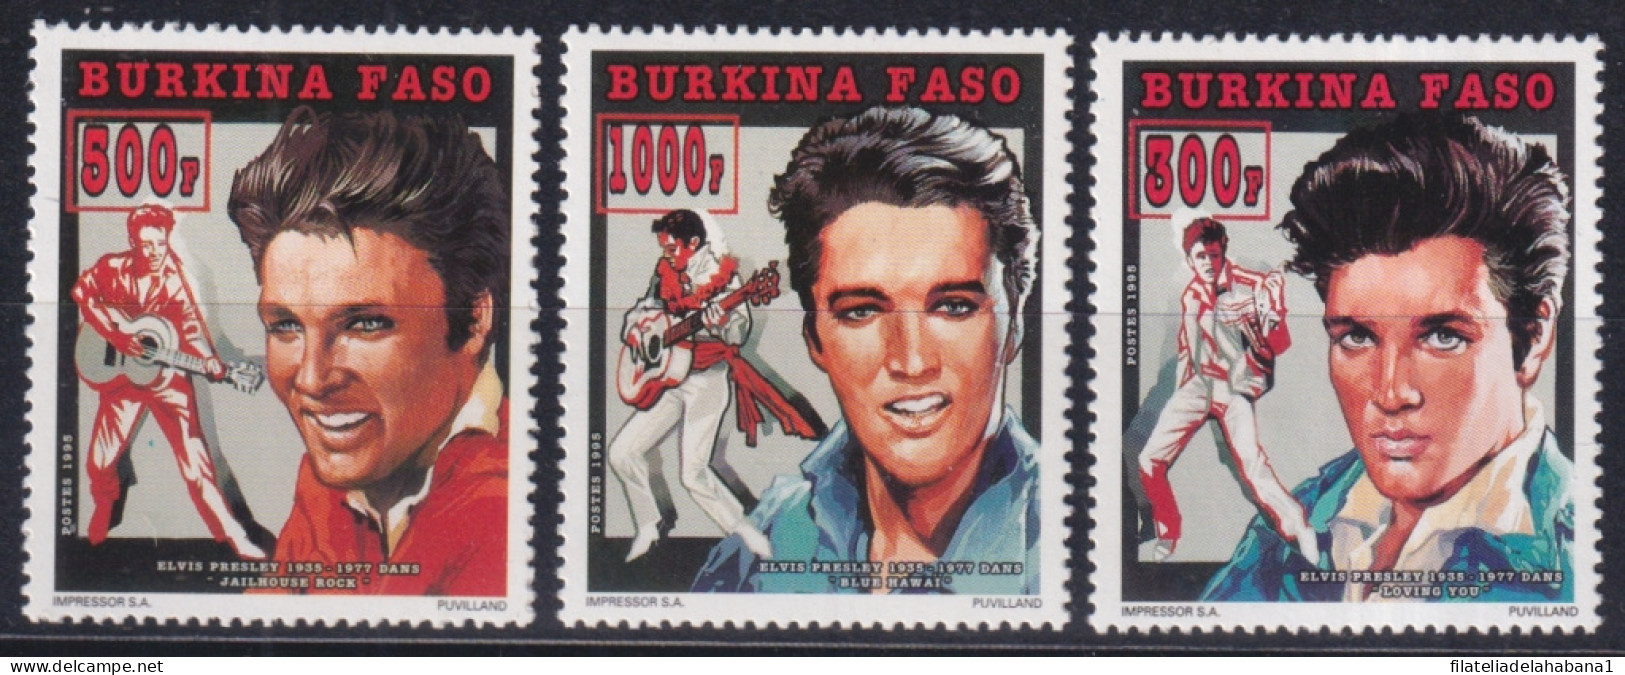 F-EX44406 BURKINA FASO MNH 1995 ELVIS PRESLEY MUSIC SINGER.  - Elvis Presley